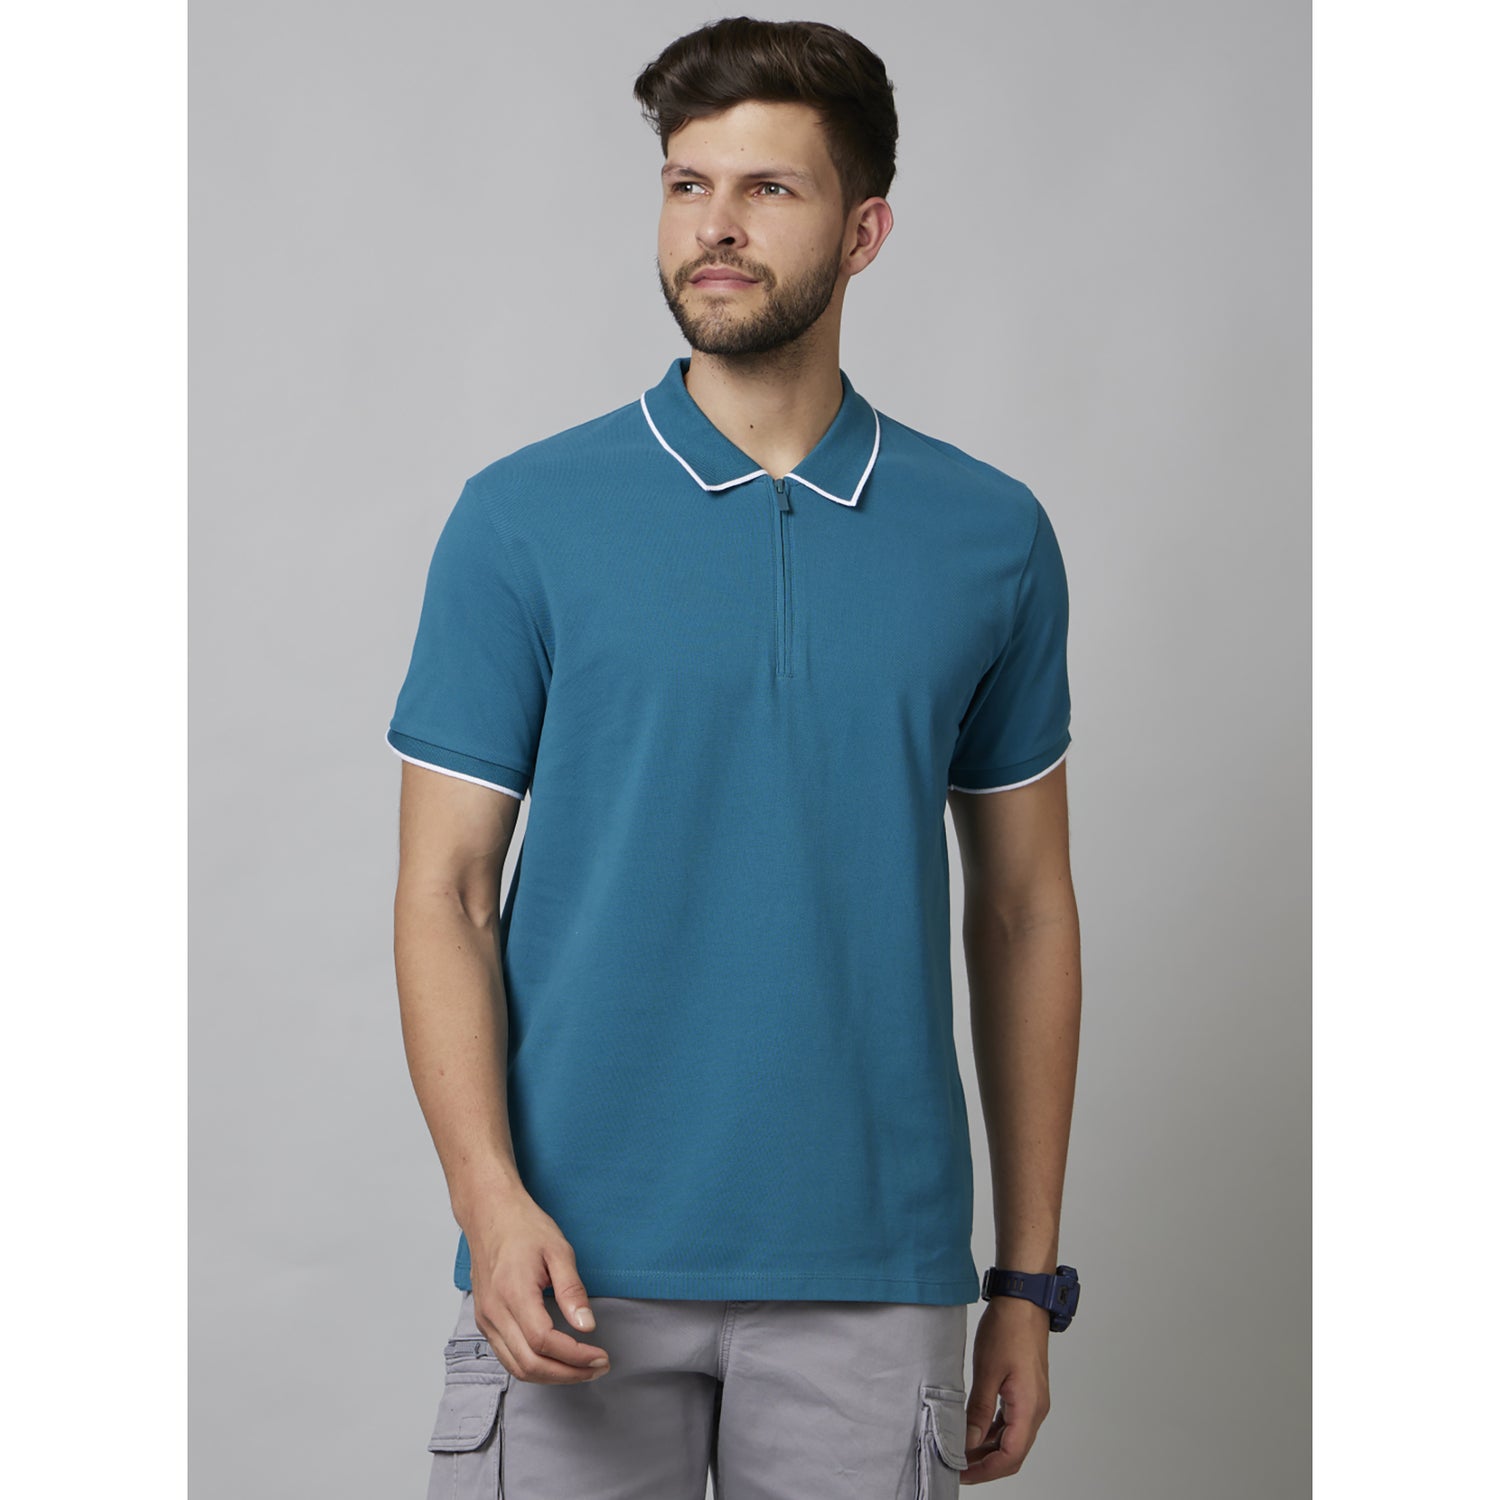 Dark Green Solid Half Sleeve Cotton T-Shirts (FEZIP1)